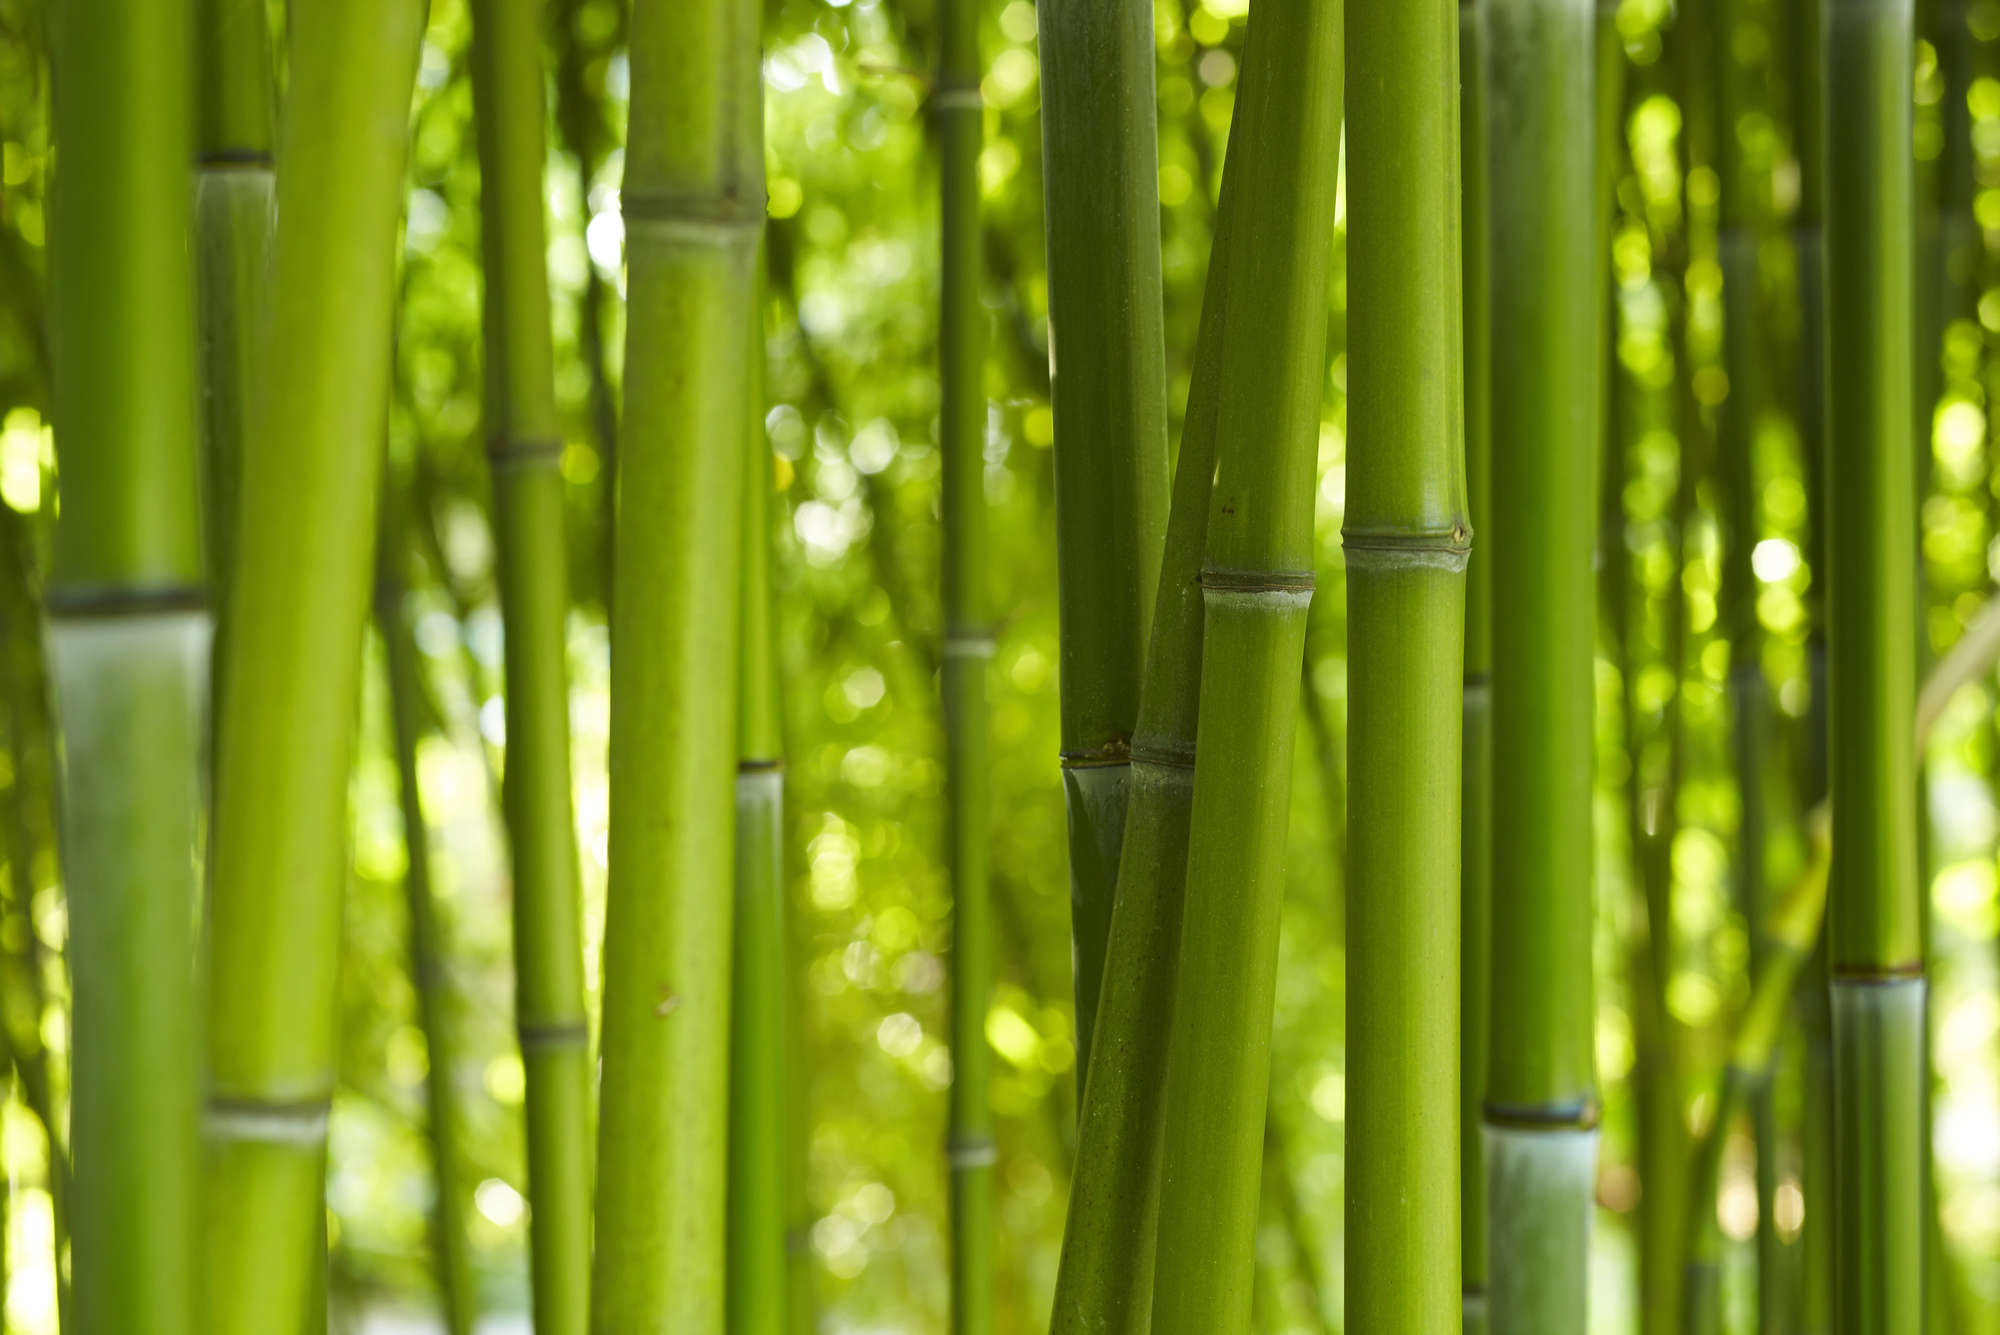             Fototapete Bambus in Grün – Mattes Glattvlies
        